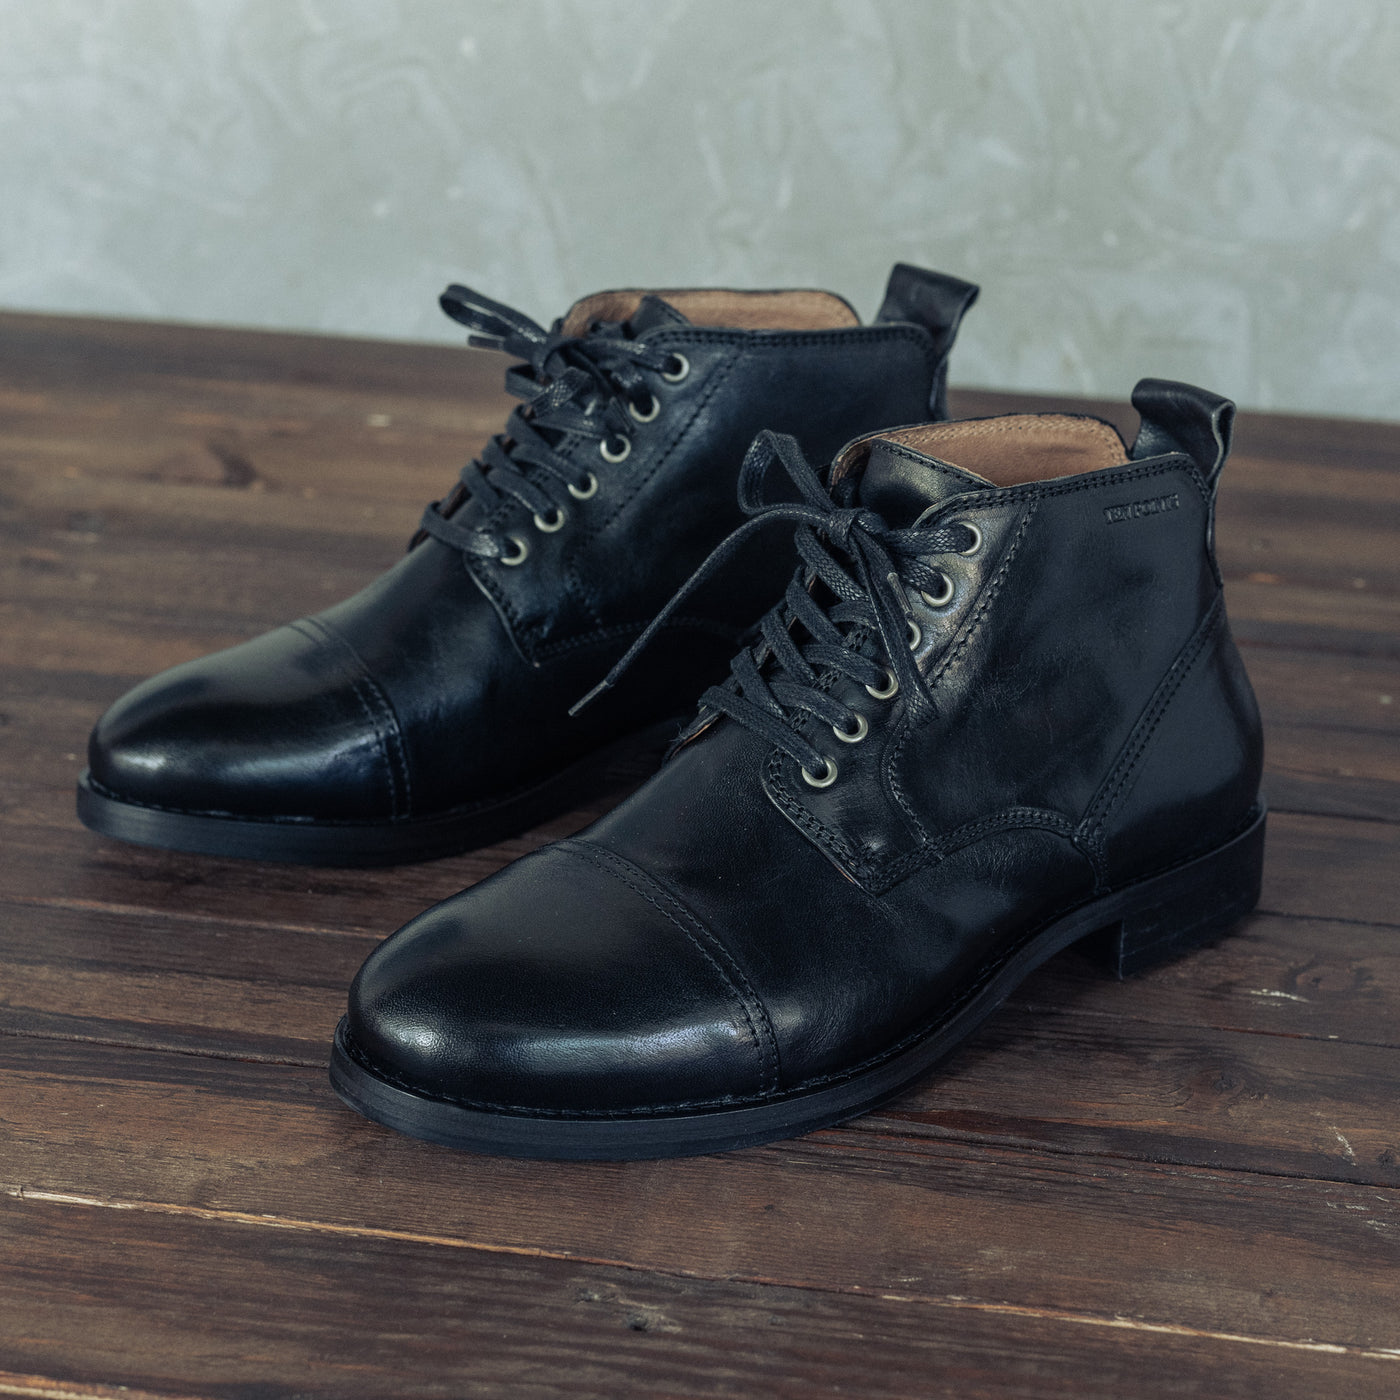 TEN POINTS - Boots - New Mercury - Black